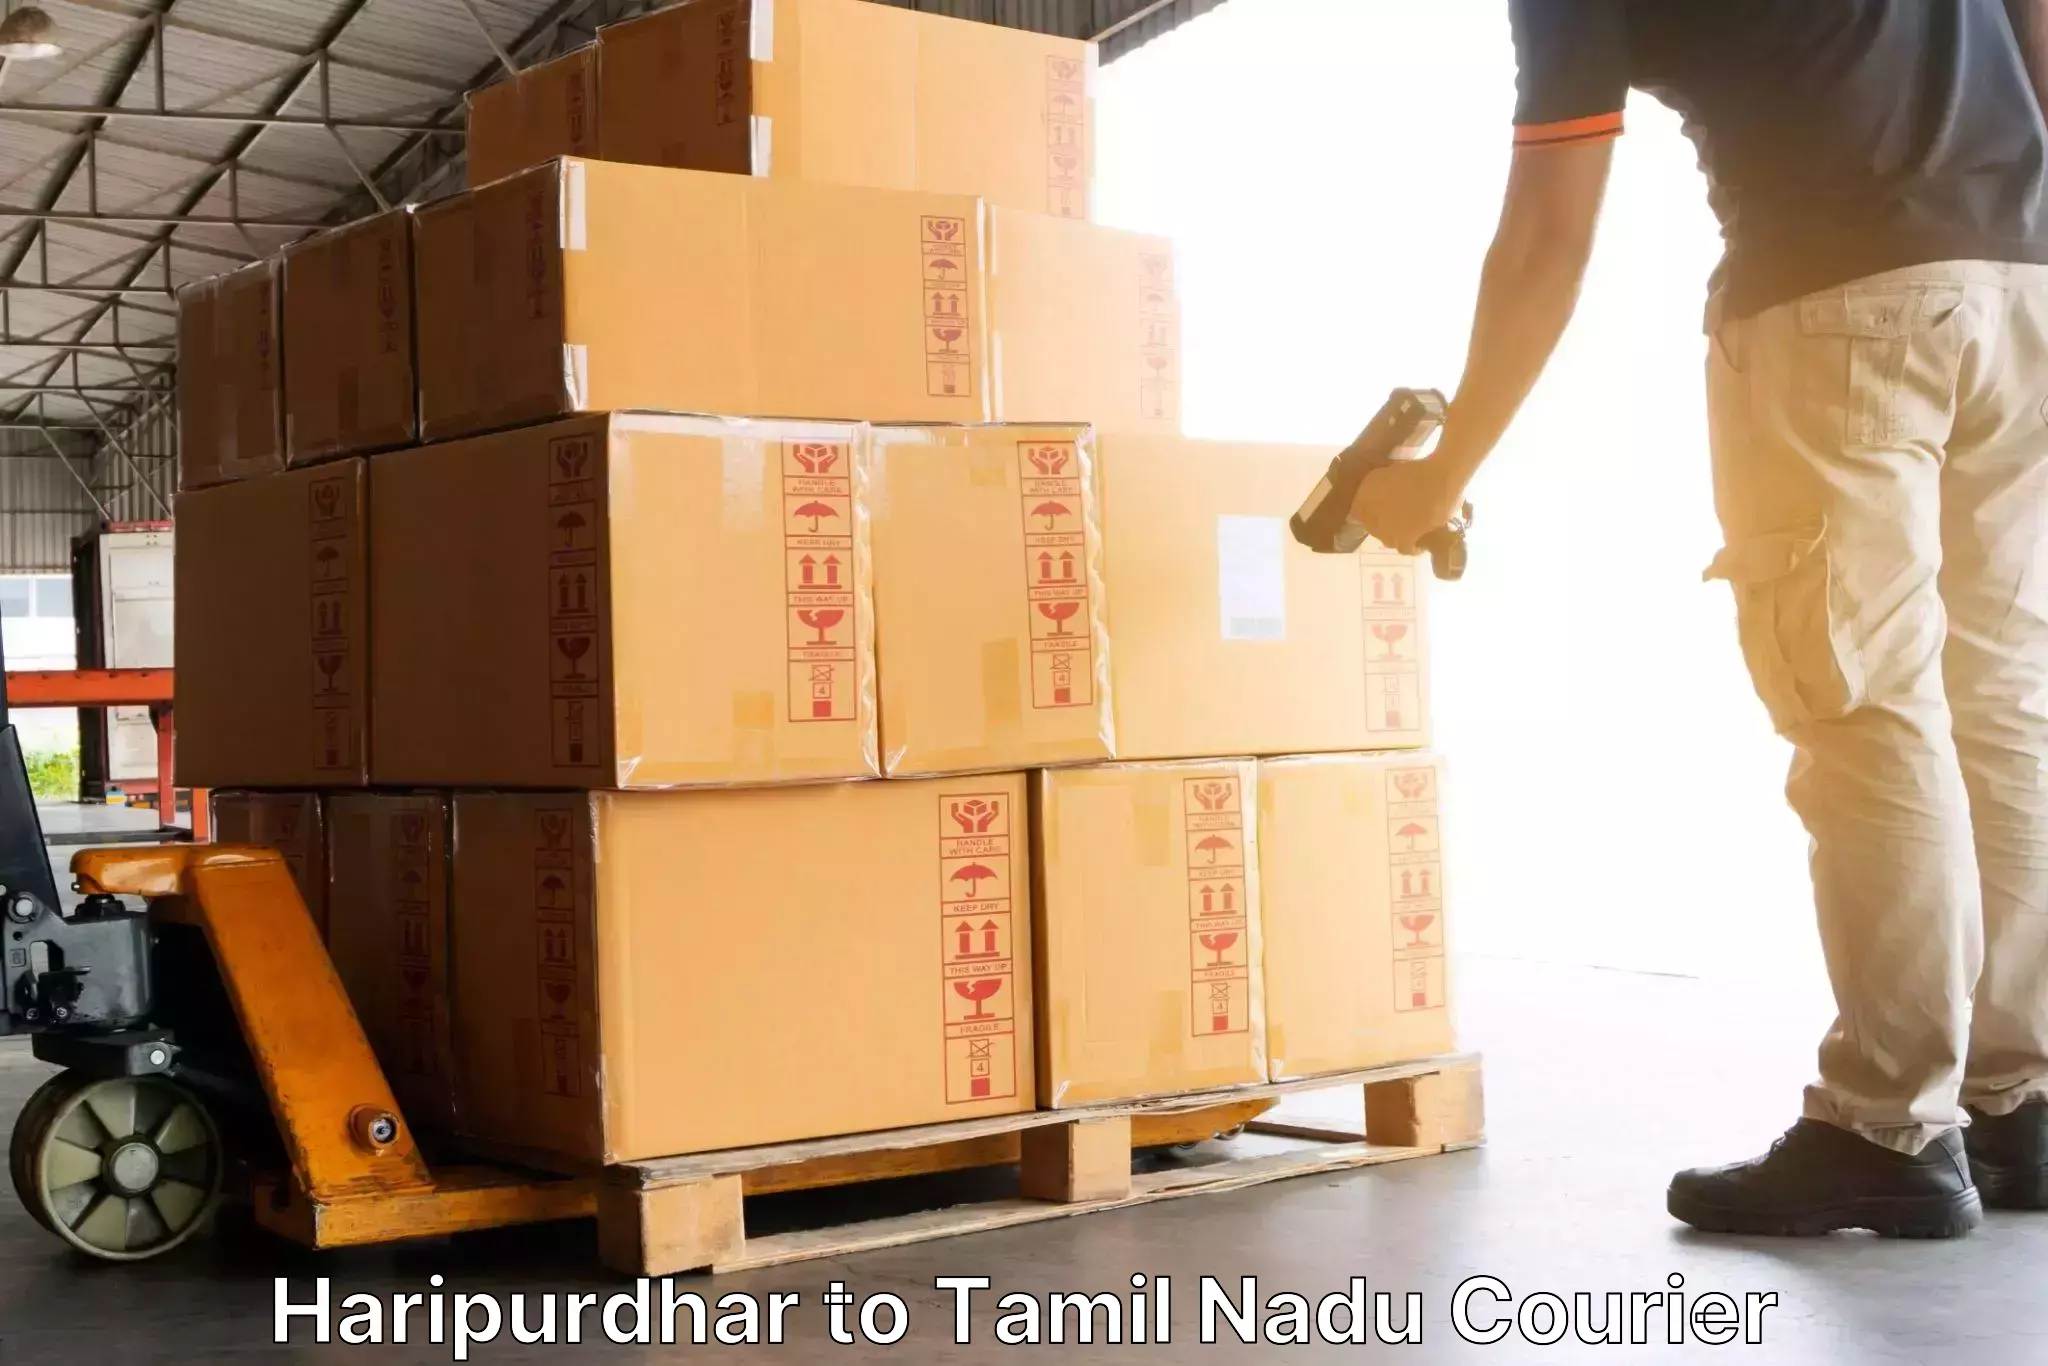 Courier service partnerships Haripurdhar to Ulundurpet